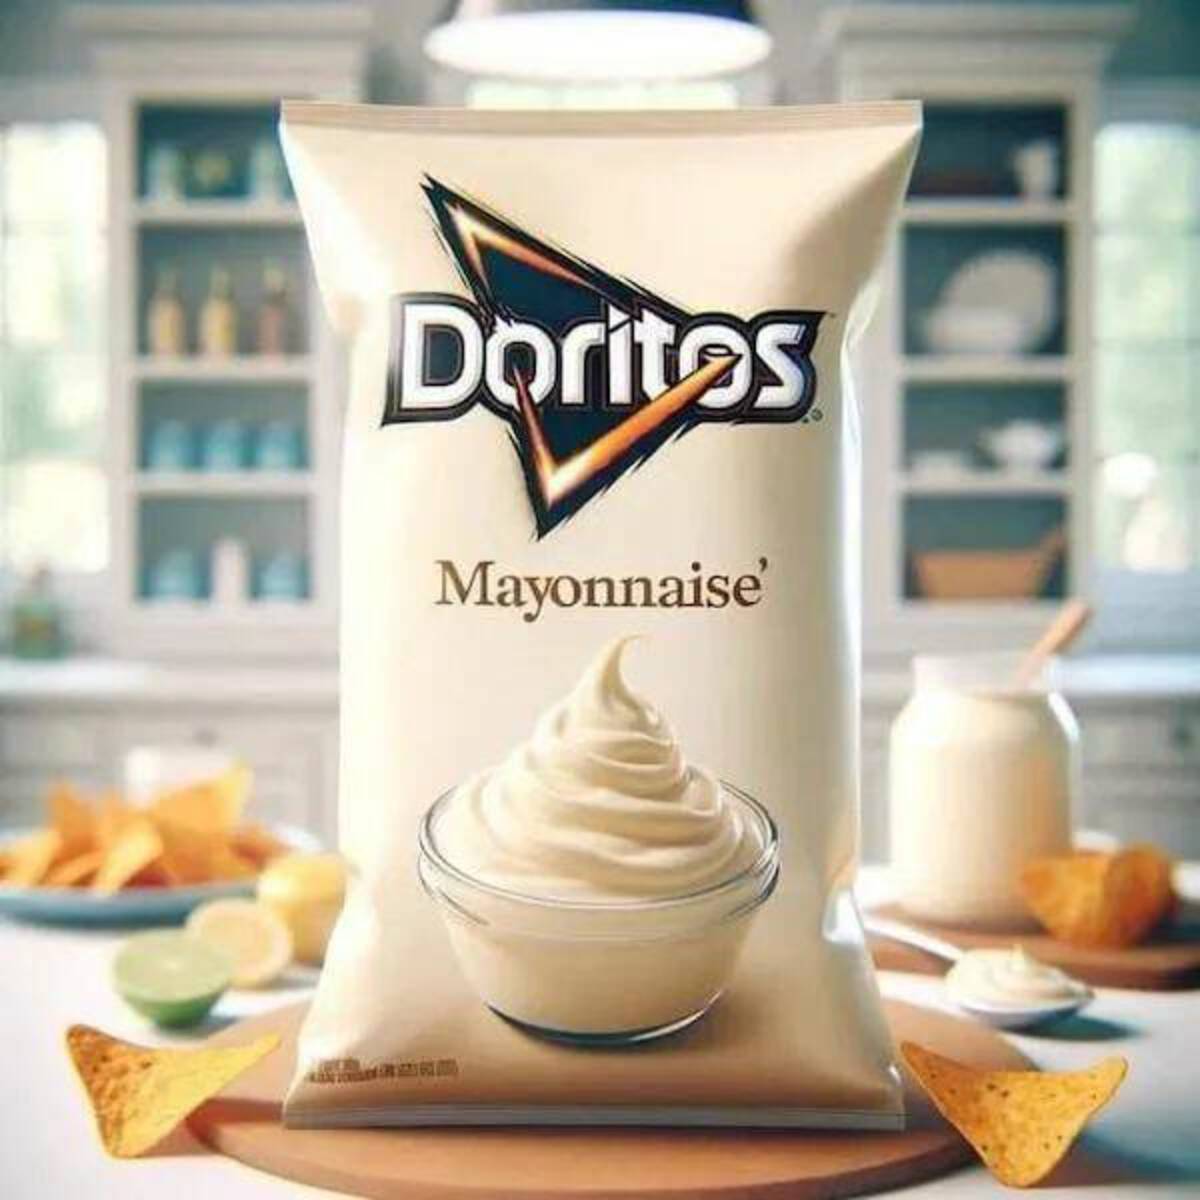 doritos - Dorites Mayonnaise Eee